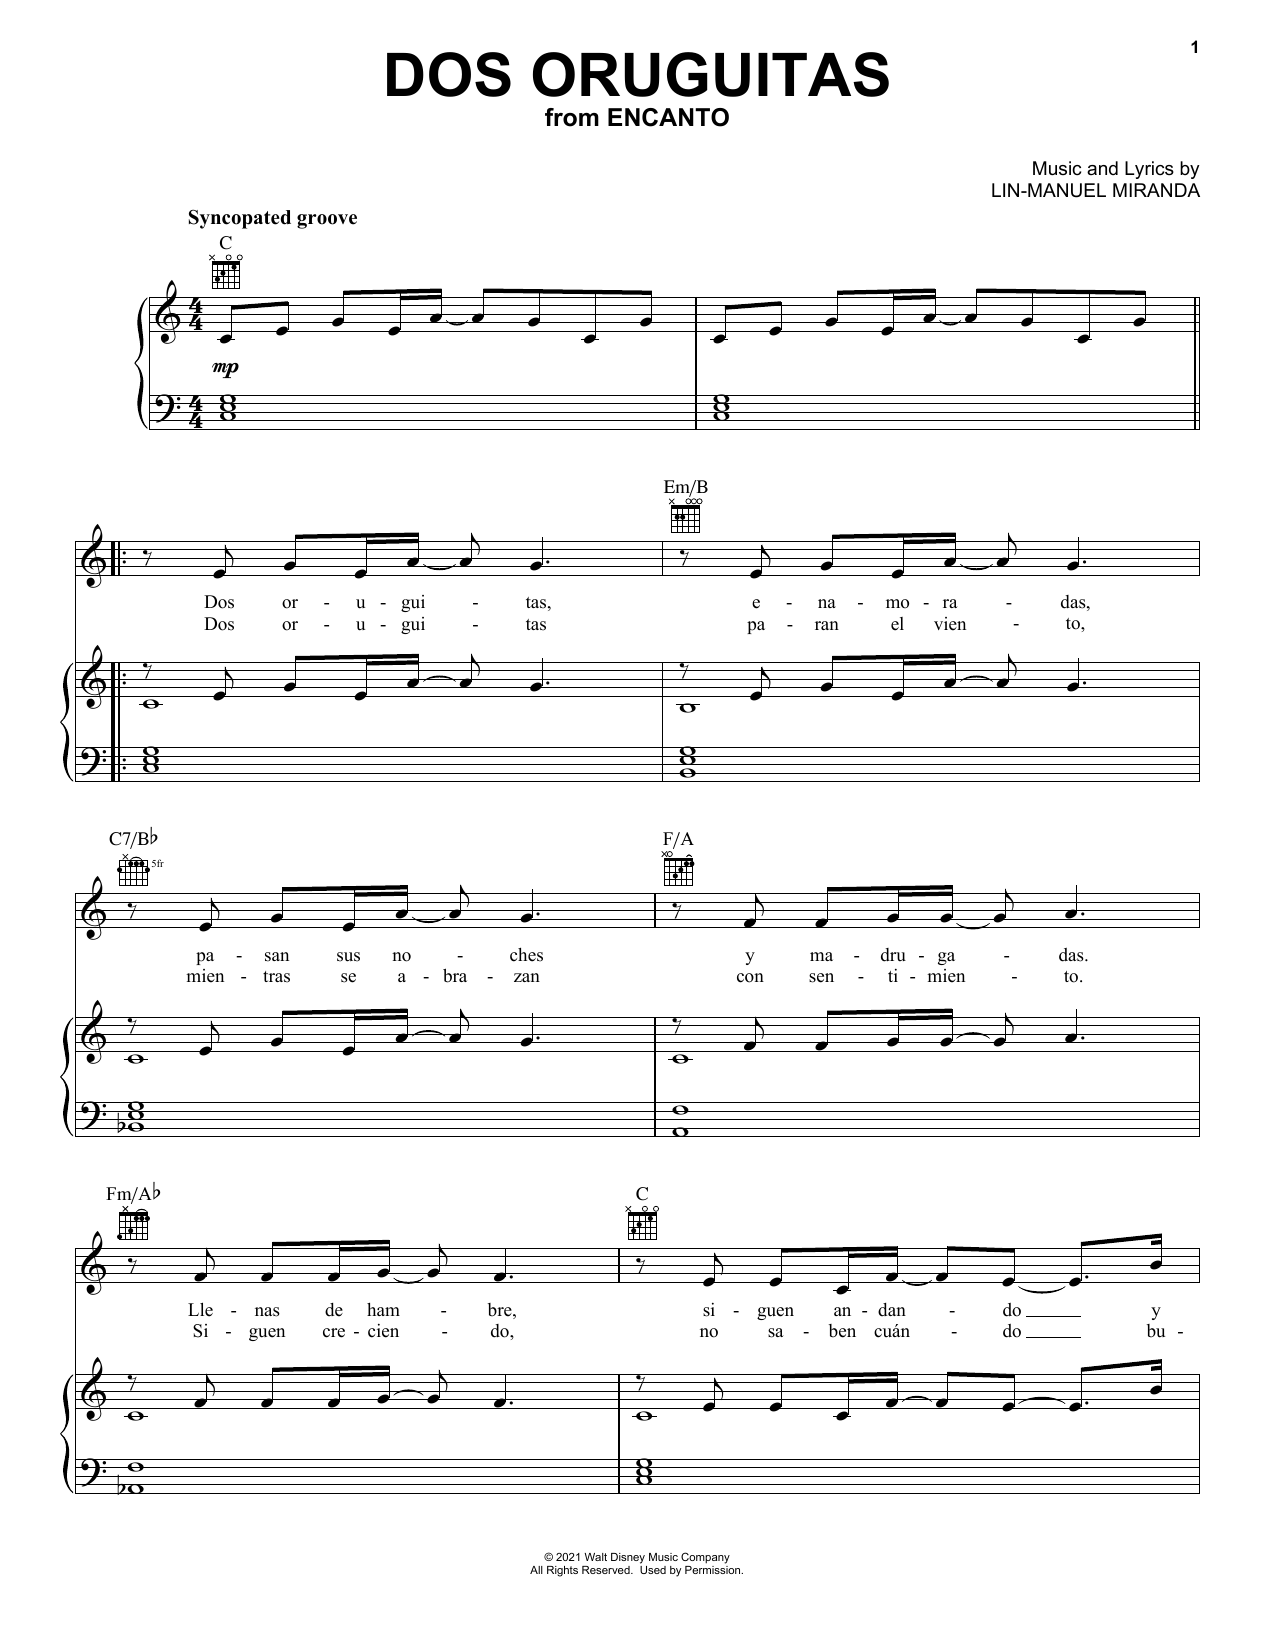 Lin-Manuel Miranda Dos Oruguitas (from Encanto) Sheet Music Notes & Chords for Big Note Piano - Download or Print PDF